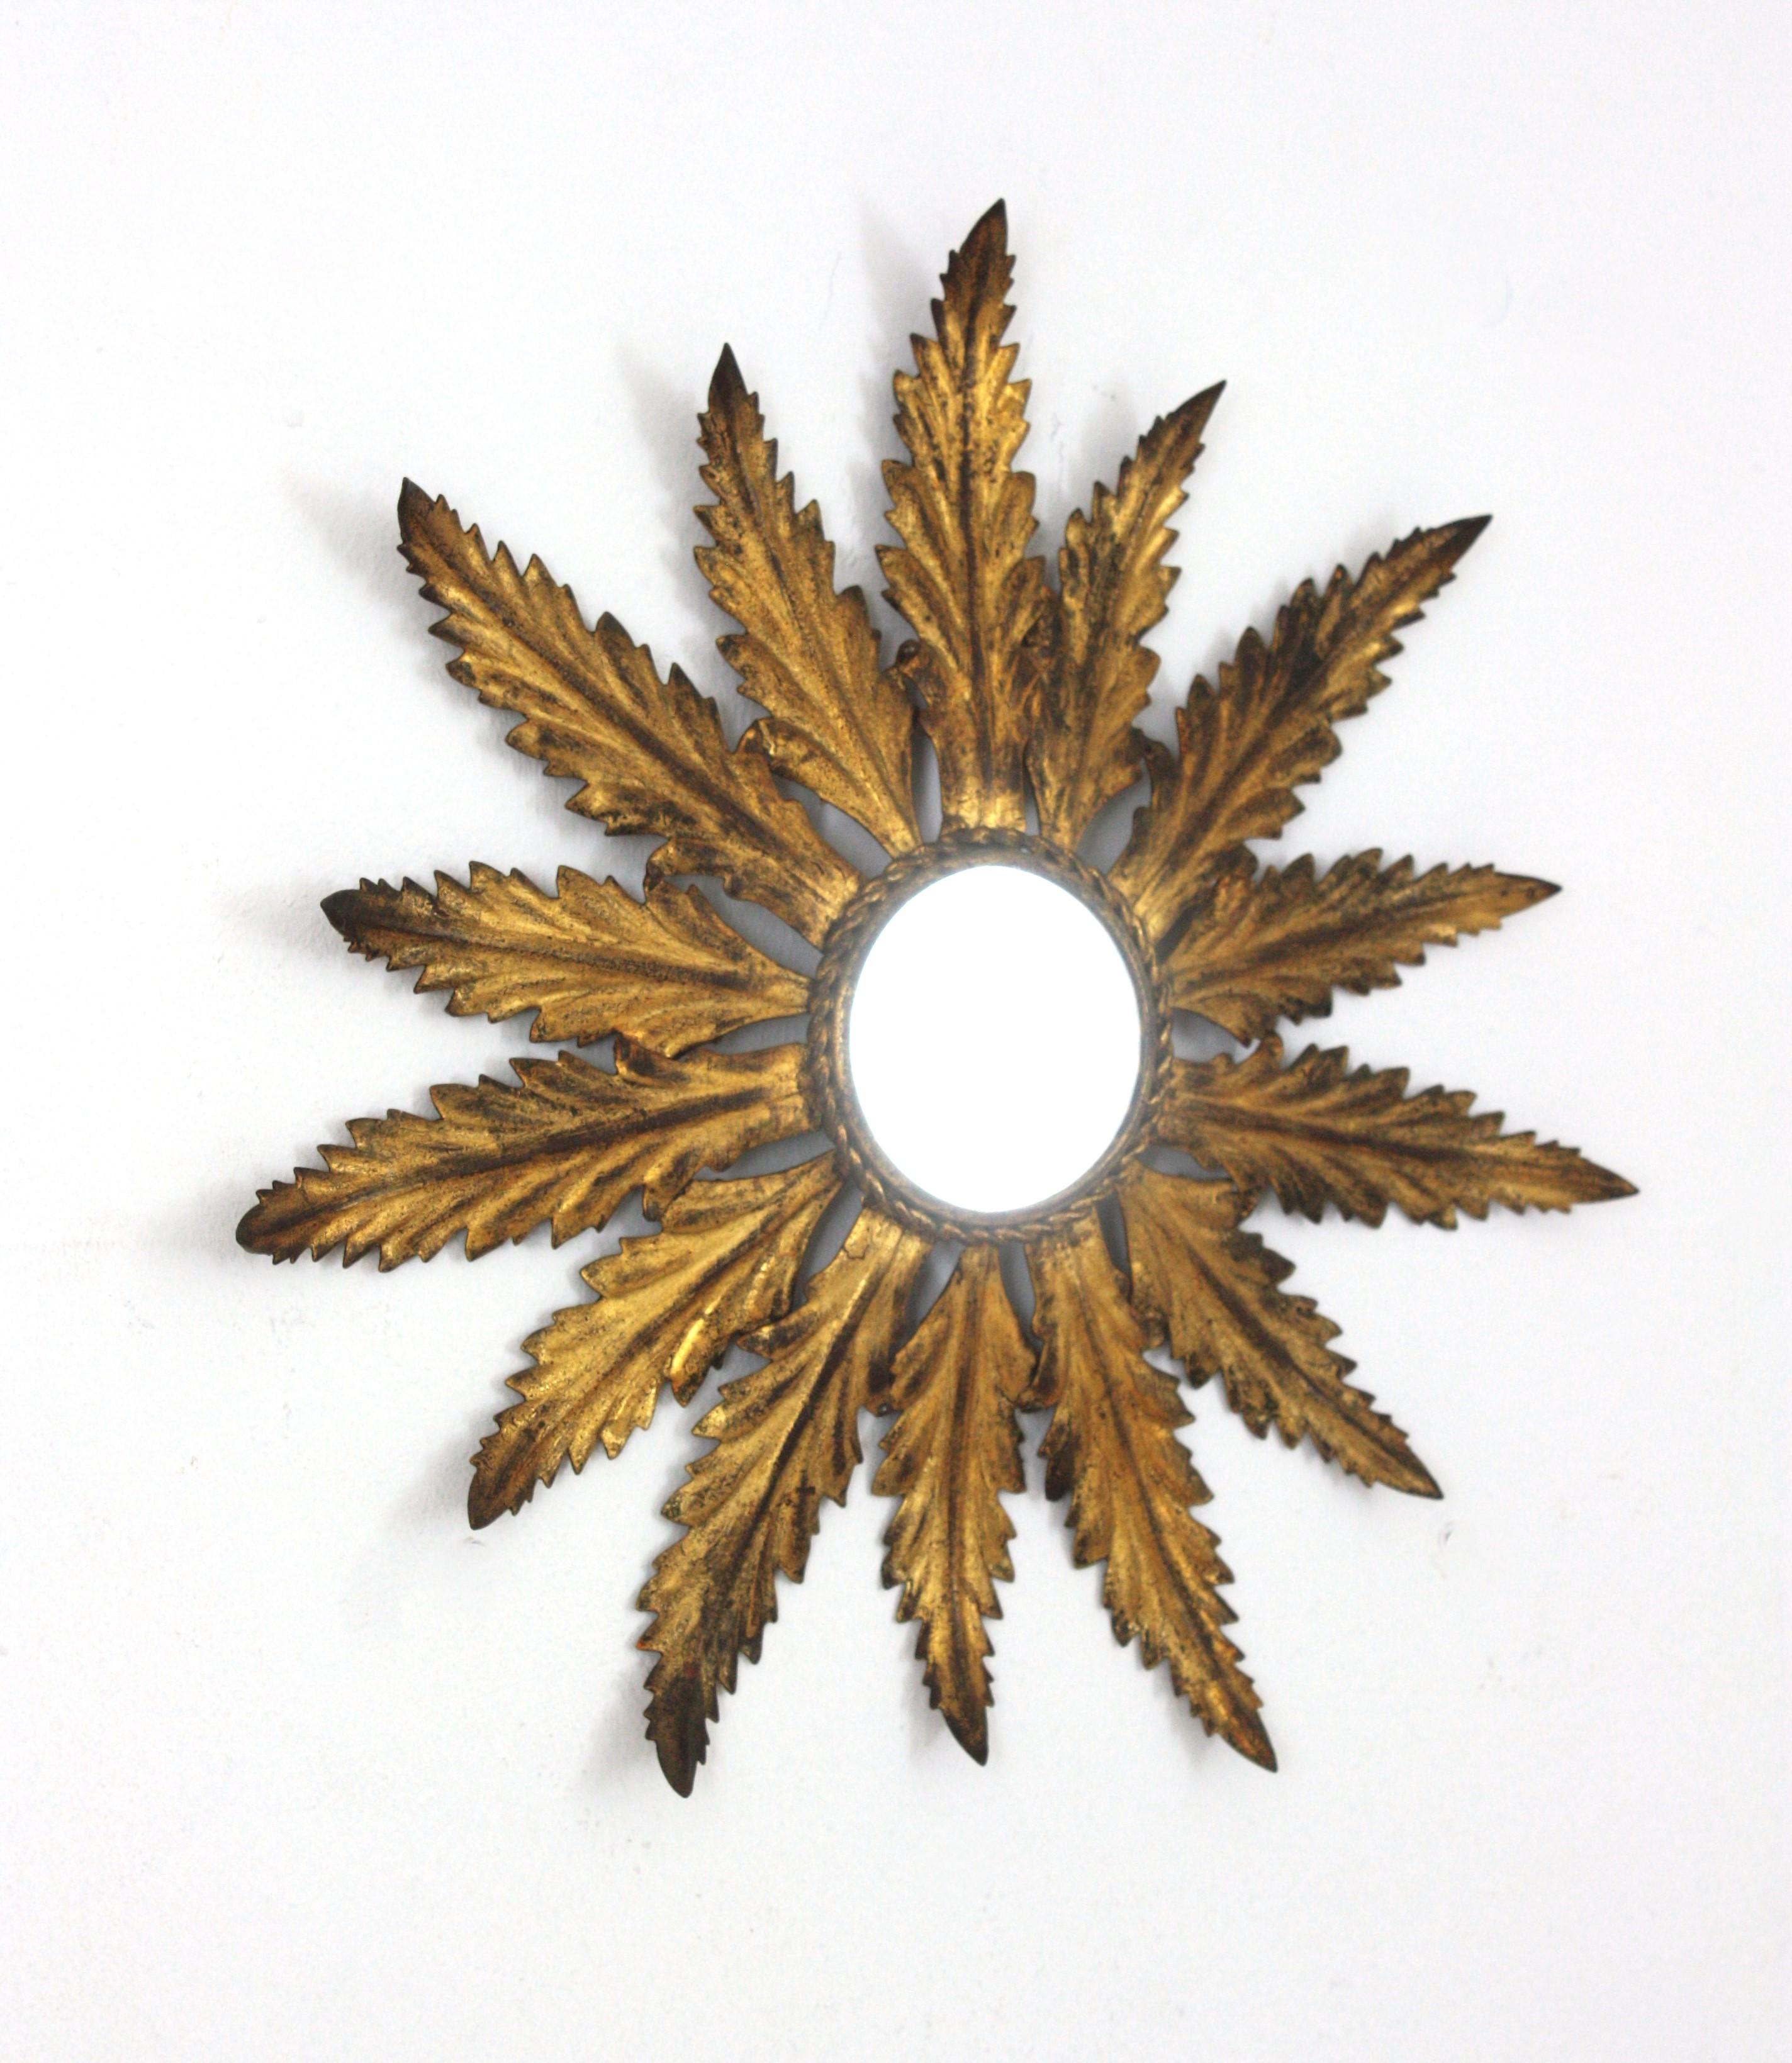 Spanish Leafed Sunburst Mirror in Gilt Metal, 1940s For Sale 2